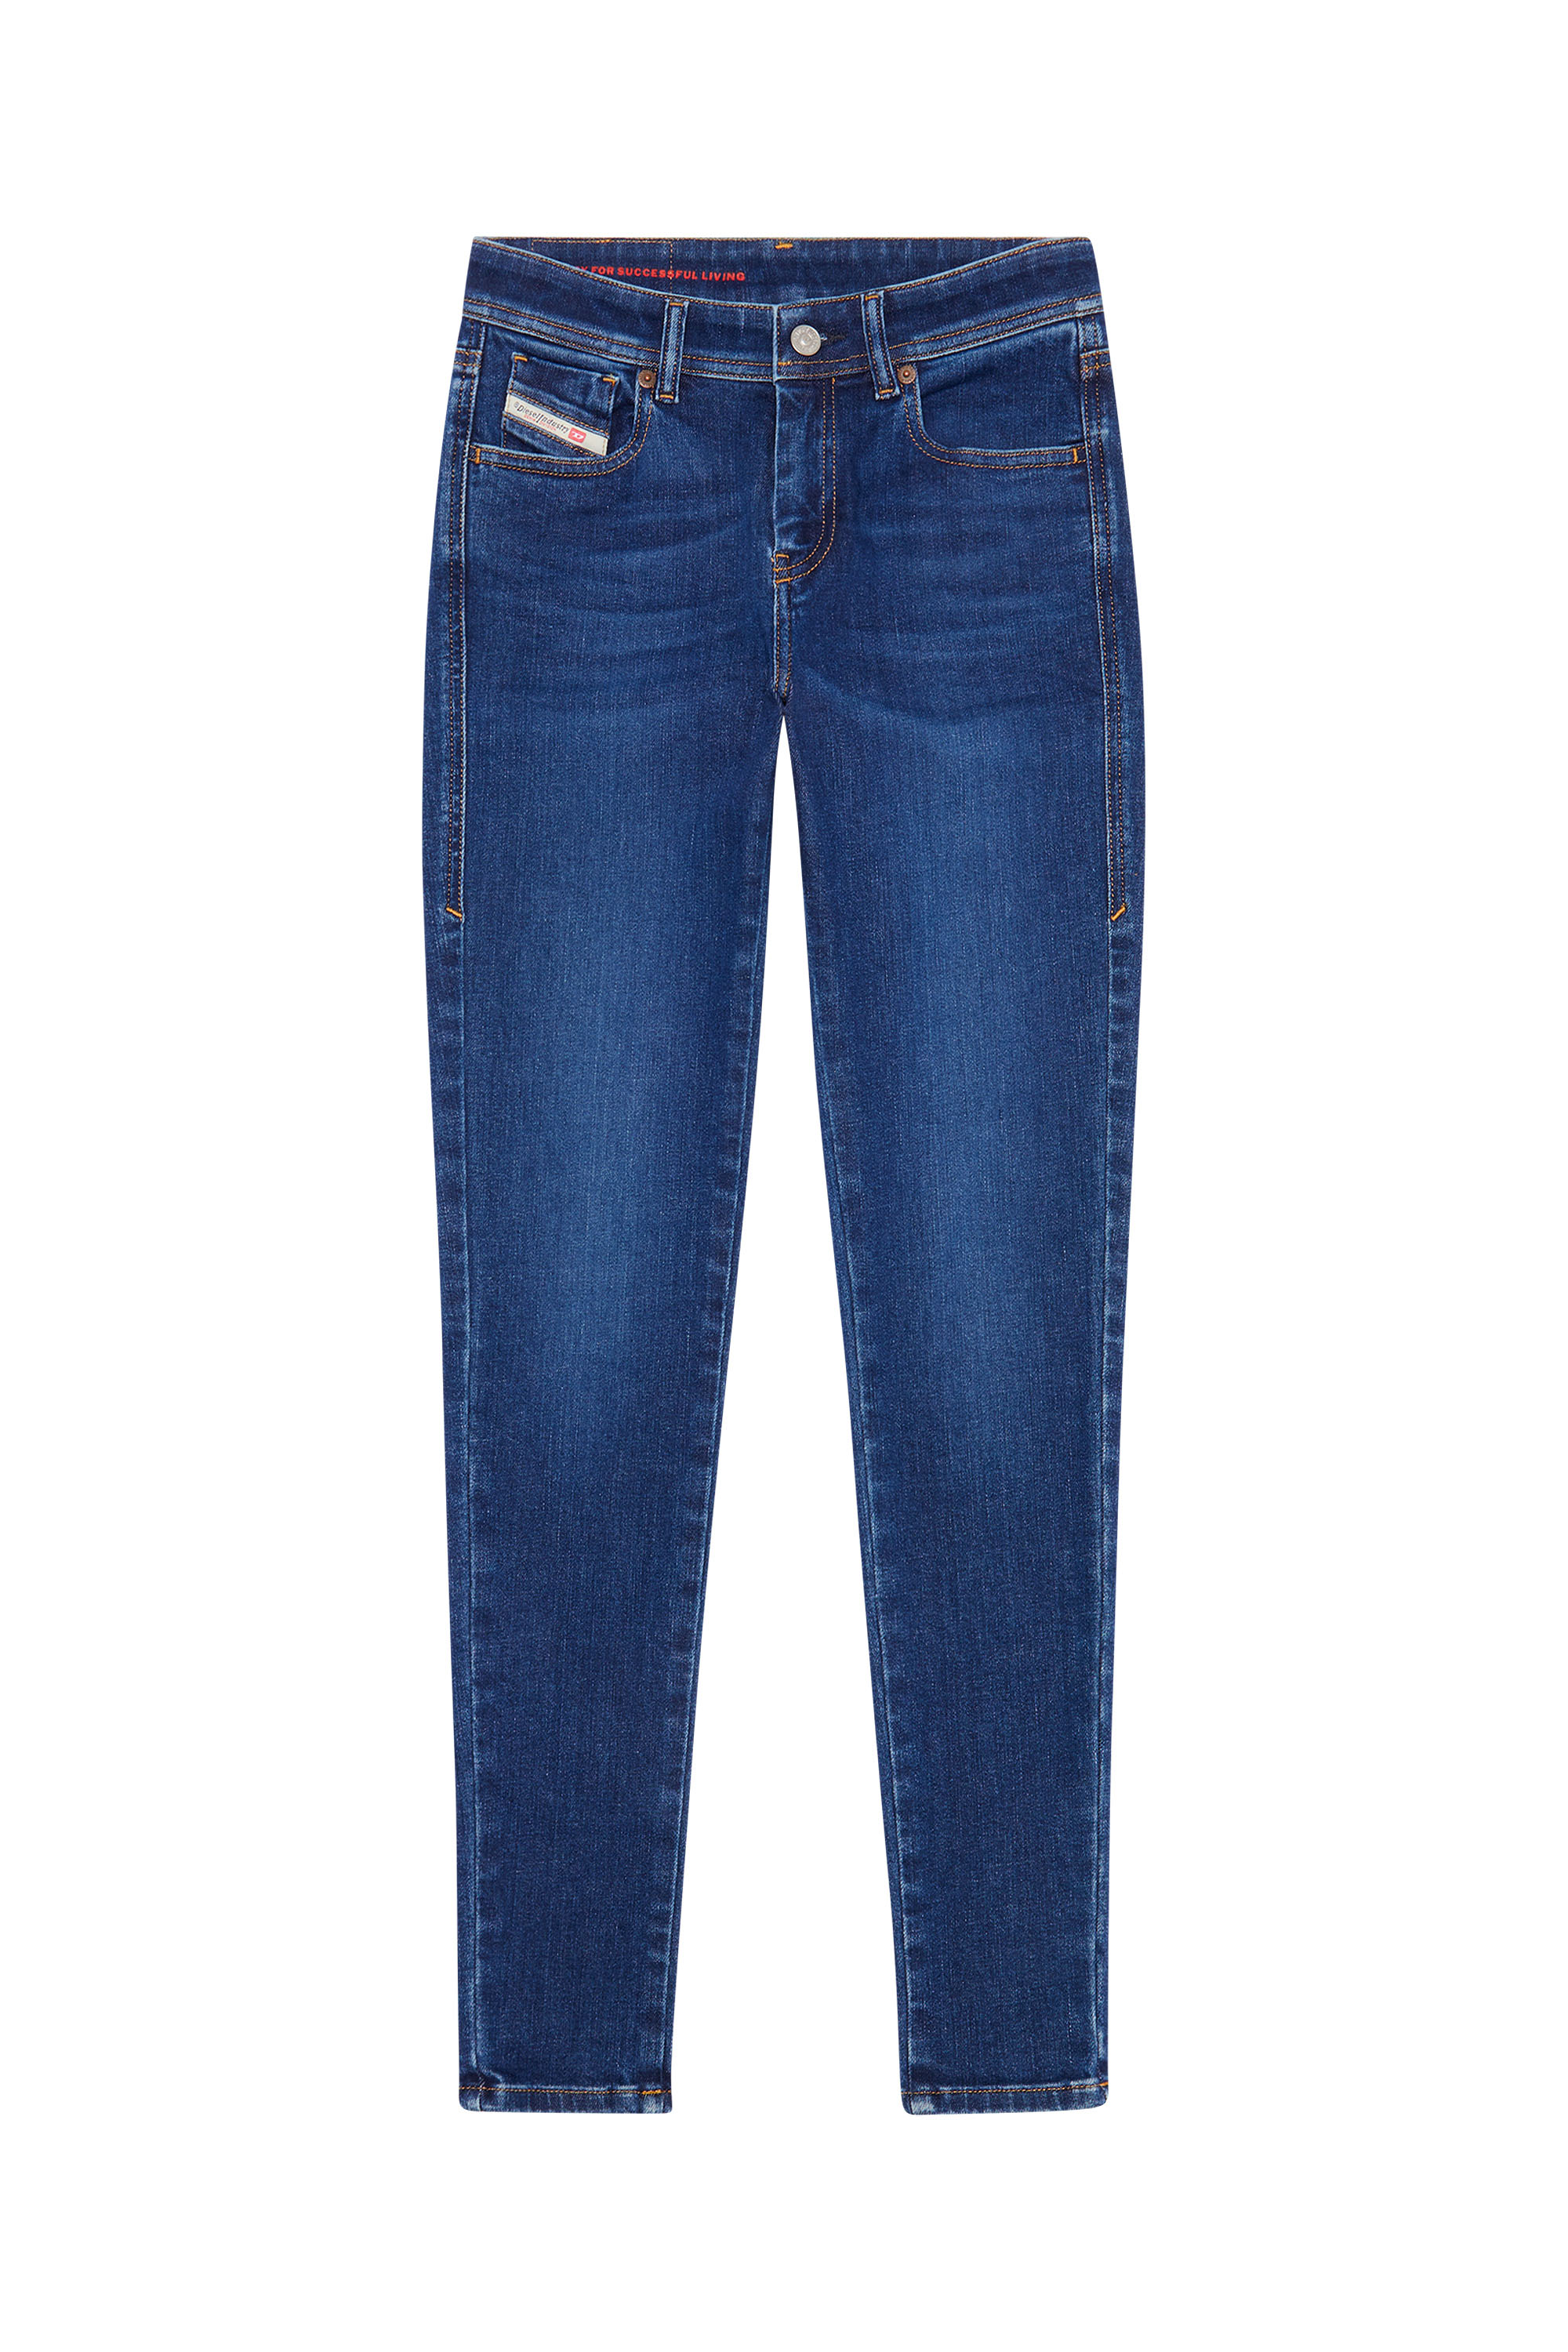 Women's Jeans: Skinny, Slim, Palazzo | Shop on Diesel.com